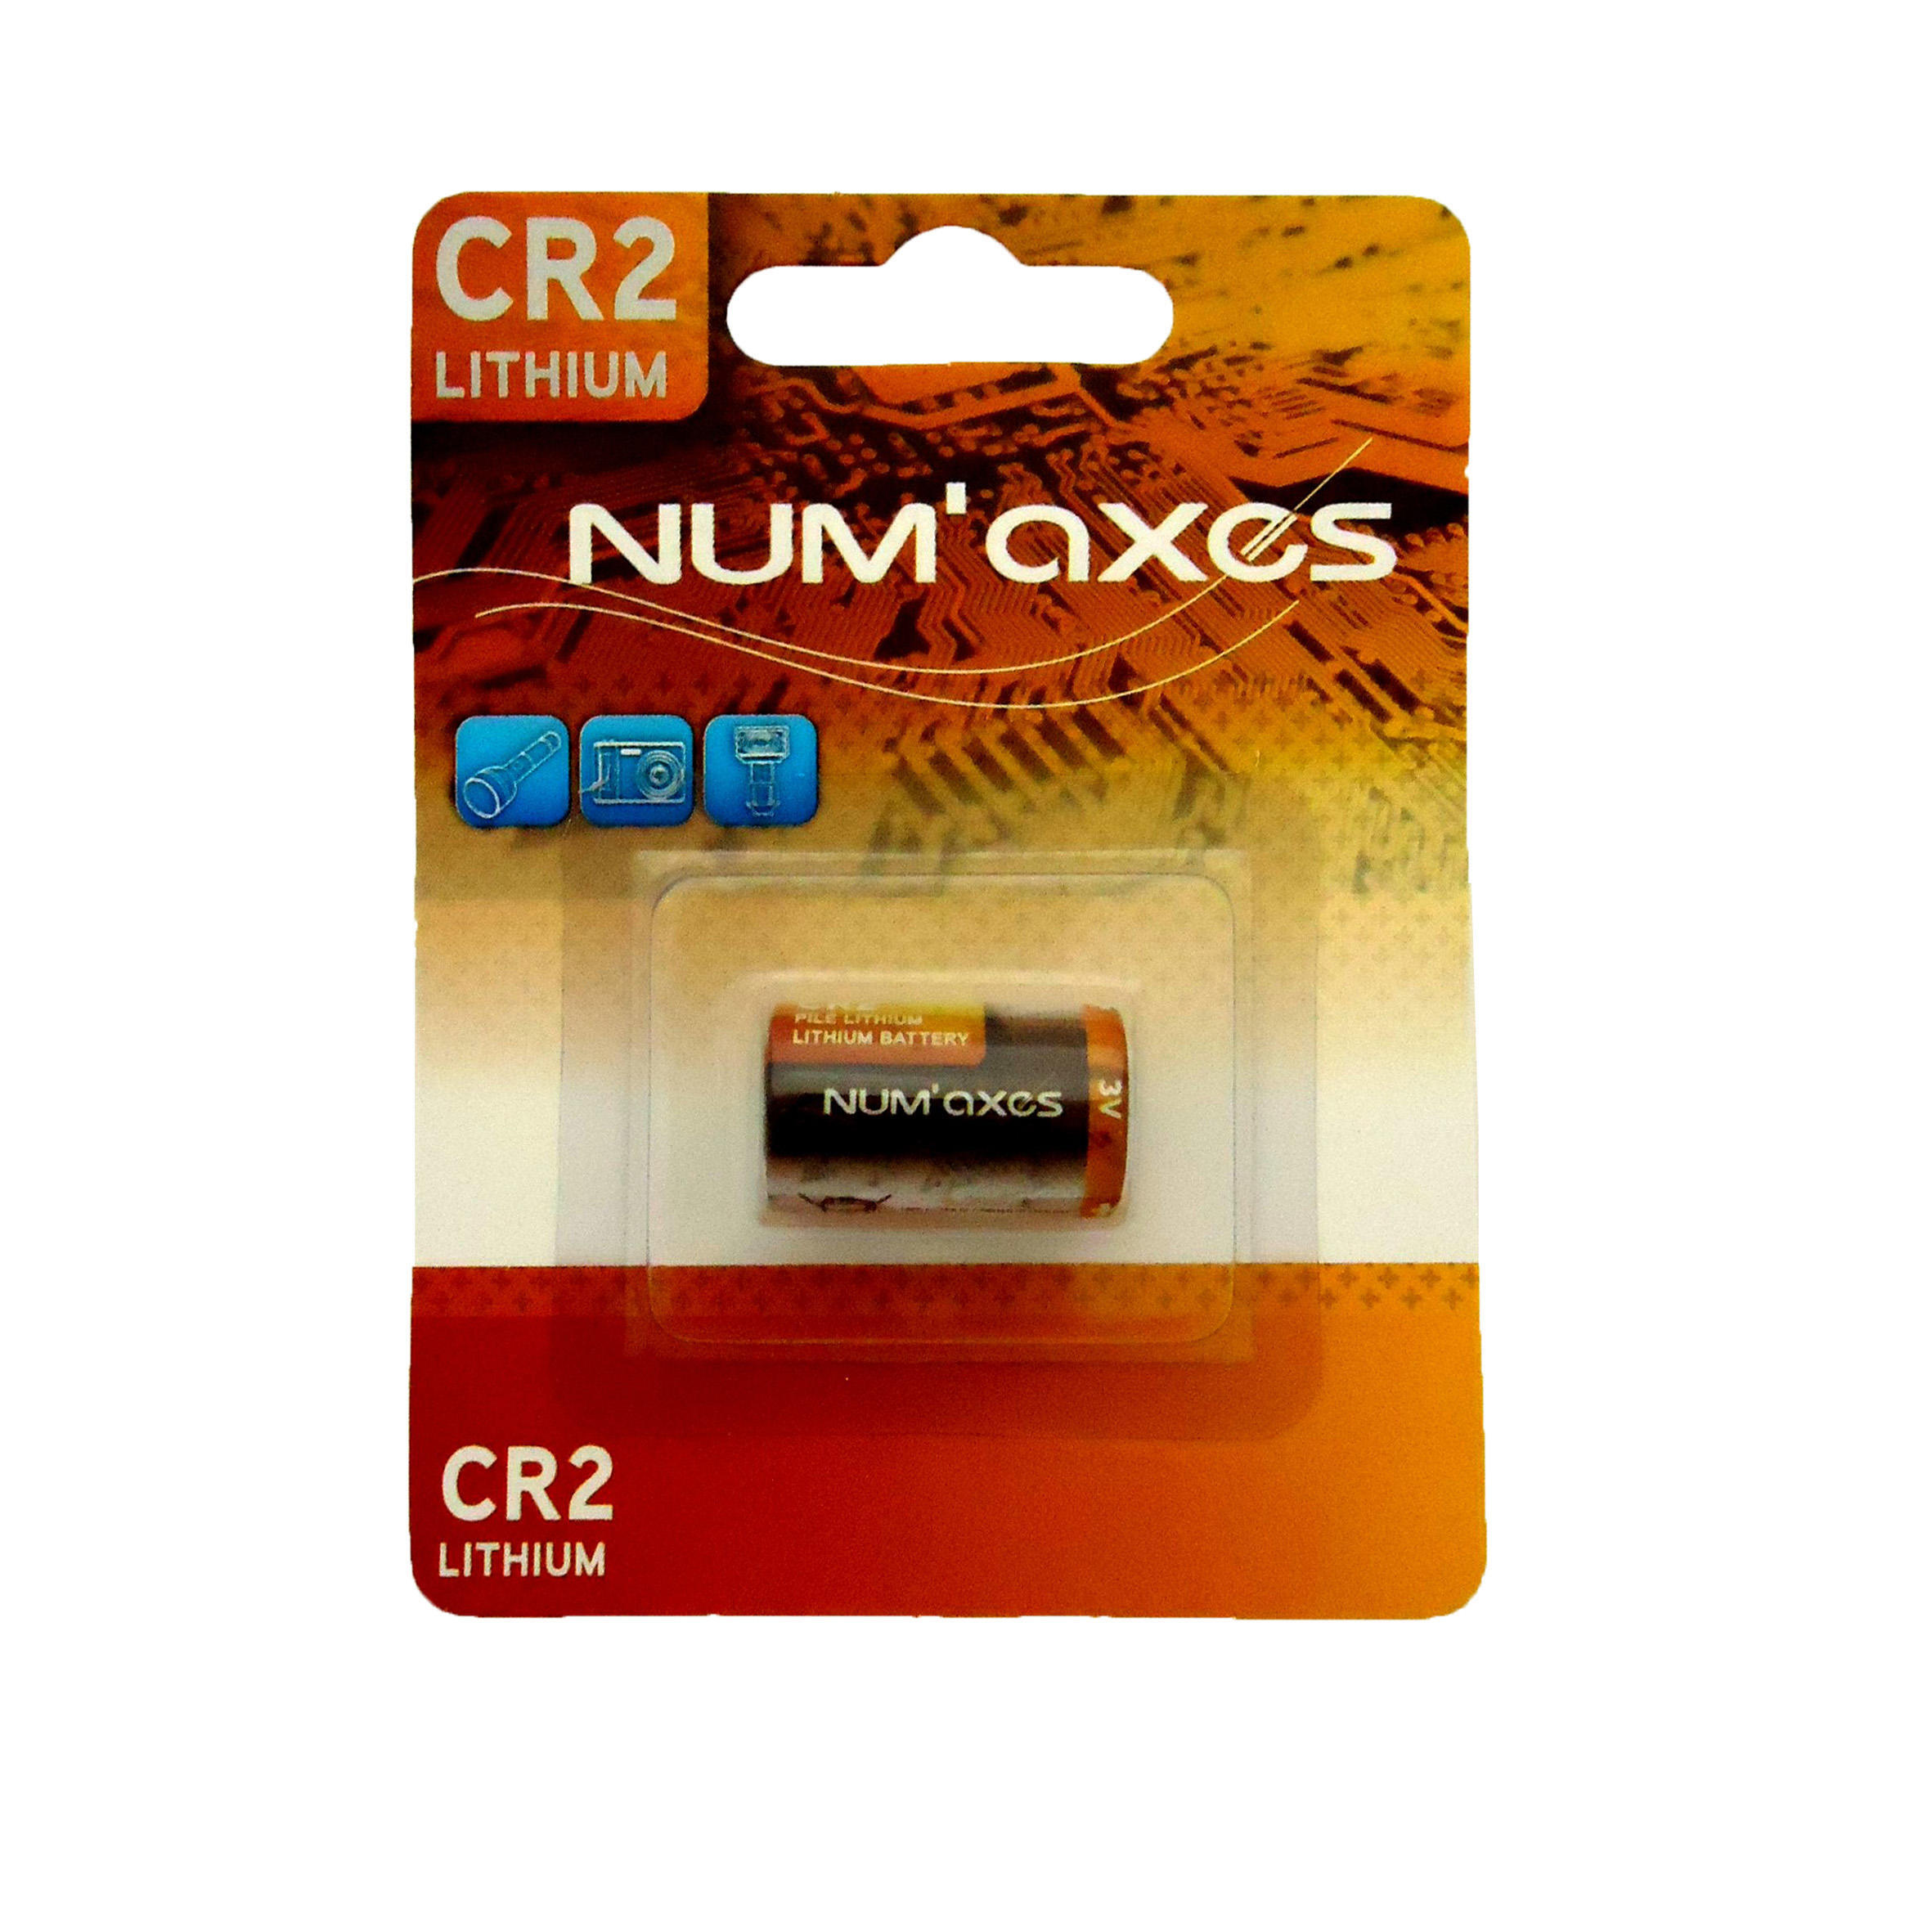 Литиевая батарейка Num'axes 3V CR2, оранжевый батарейка литиевая lecar cr2450 3v упаковка 1 шт lecar000153106 lecar арт lecar000153106